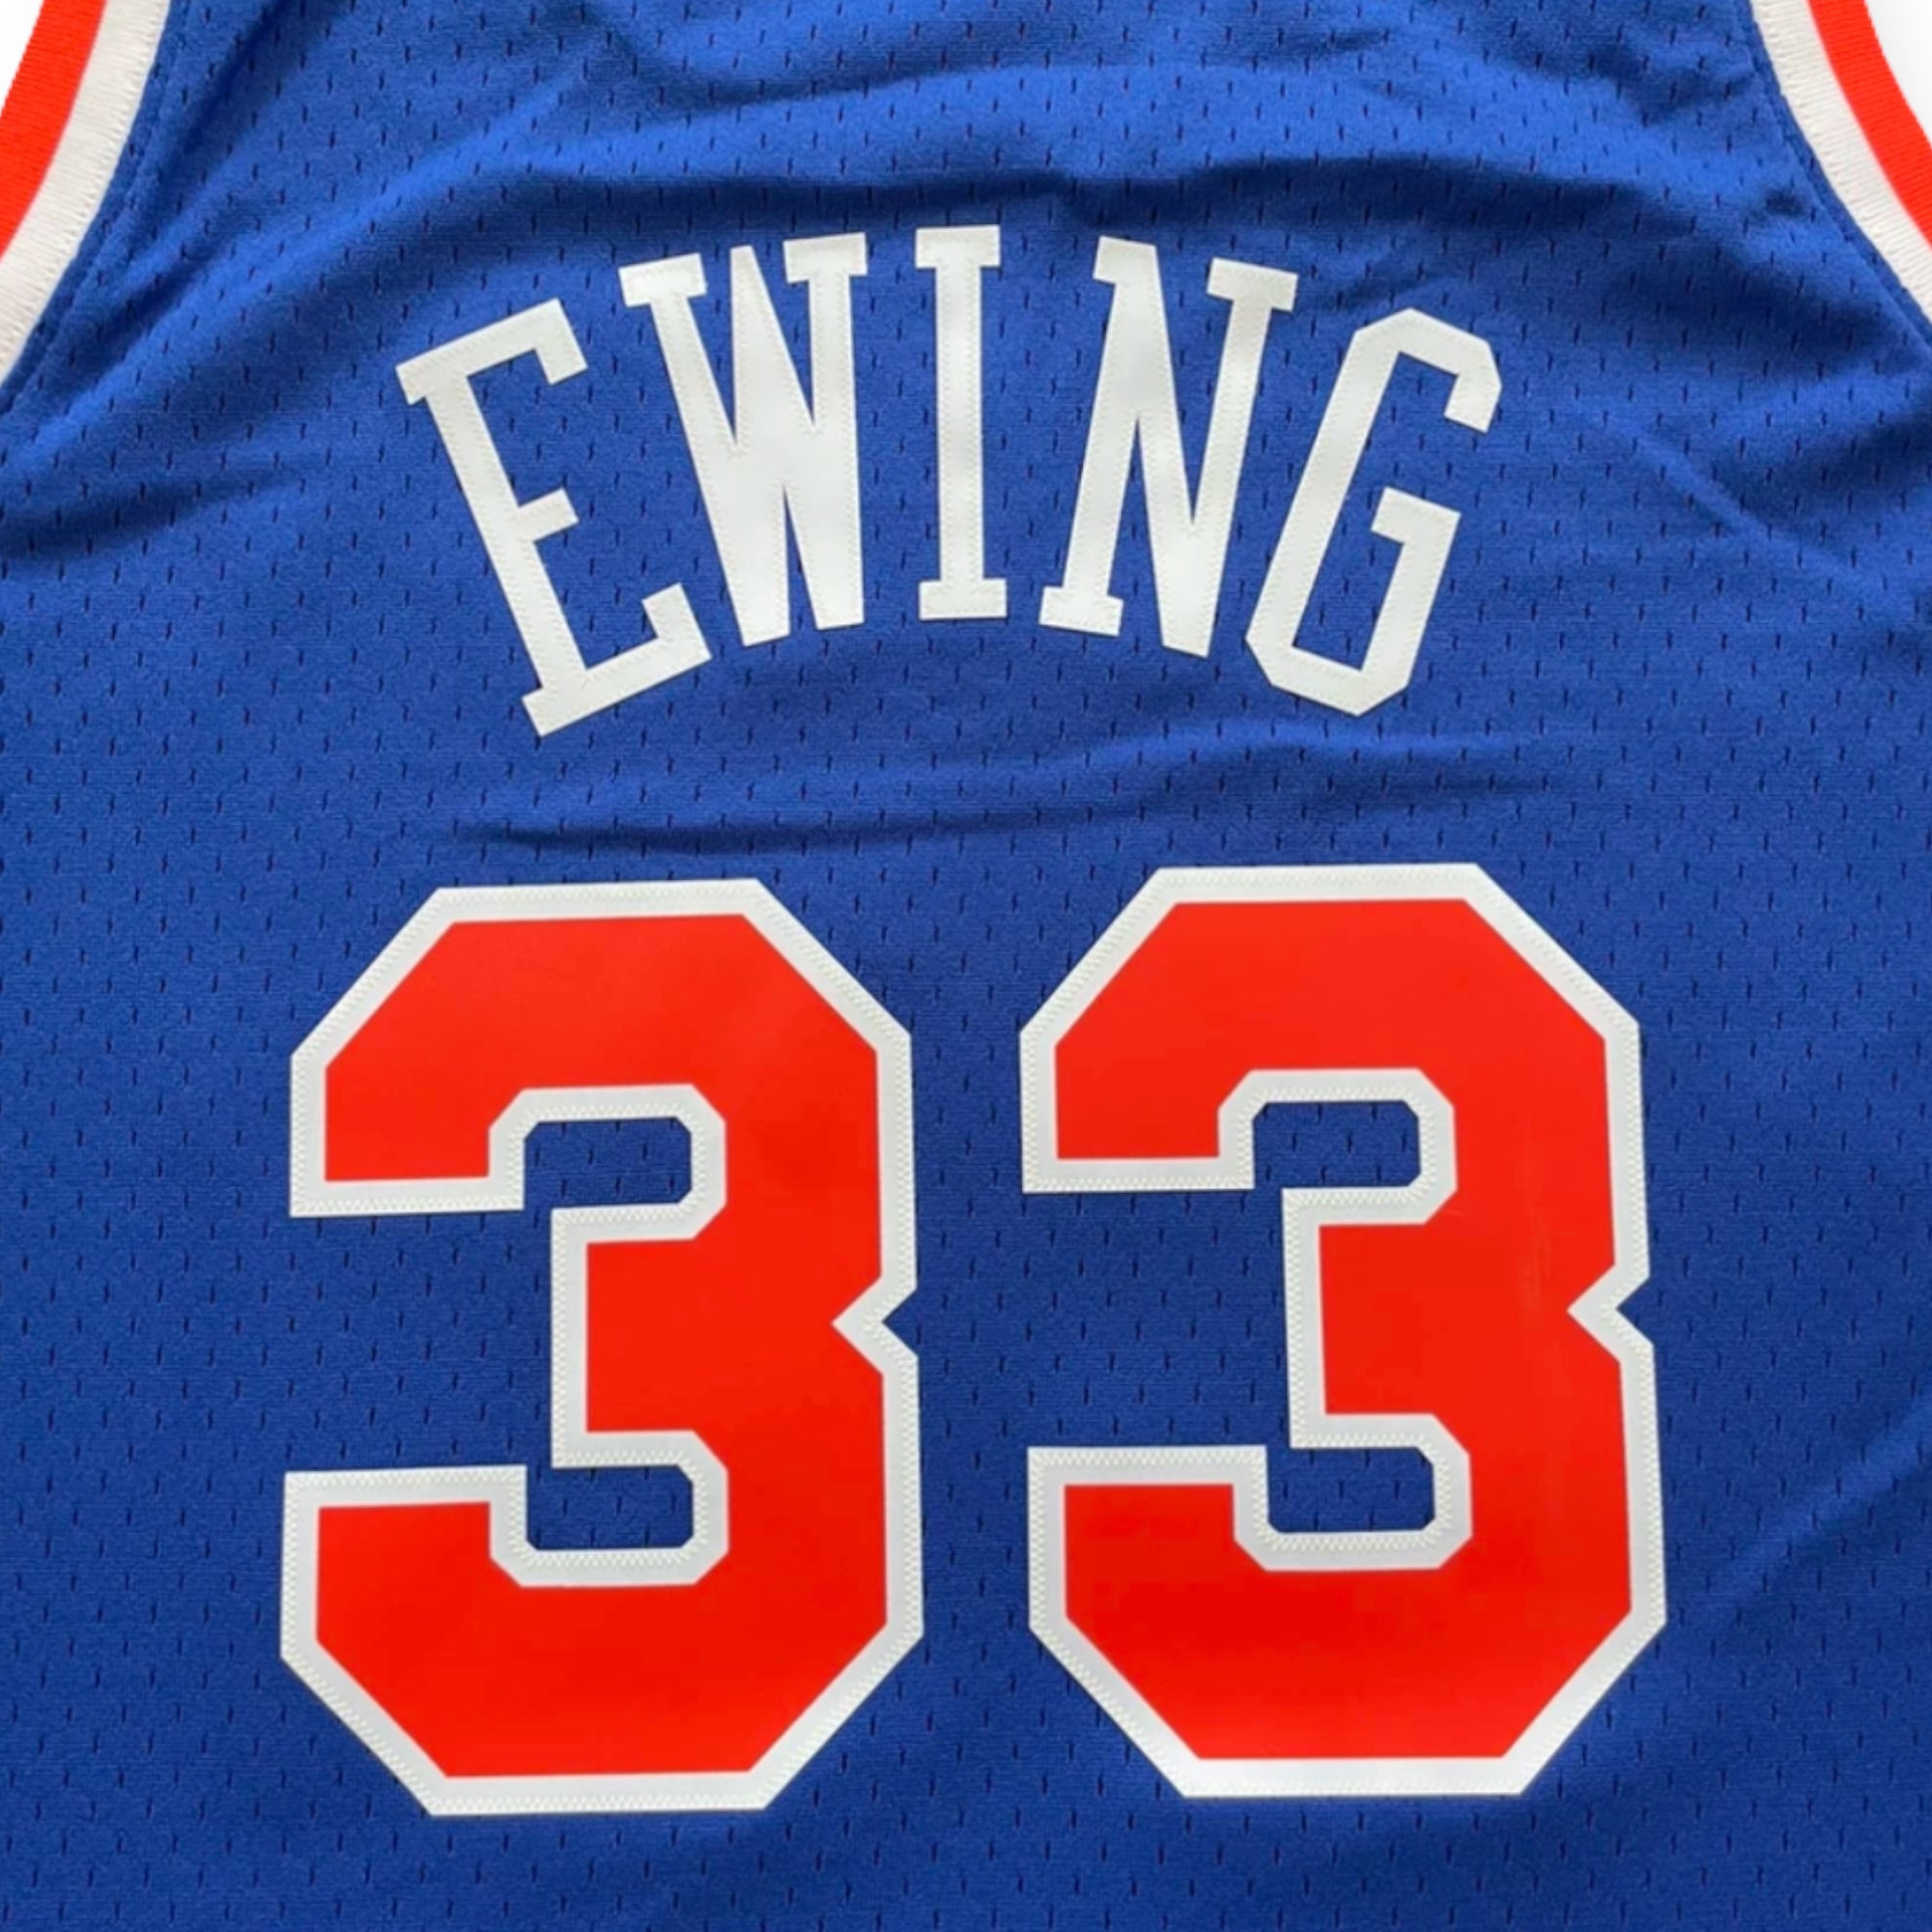 Mitchell&Ness Patrick Ewing New York Knicks 1991-1992 Away Swingman Jersey